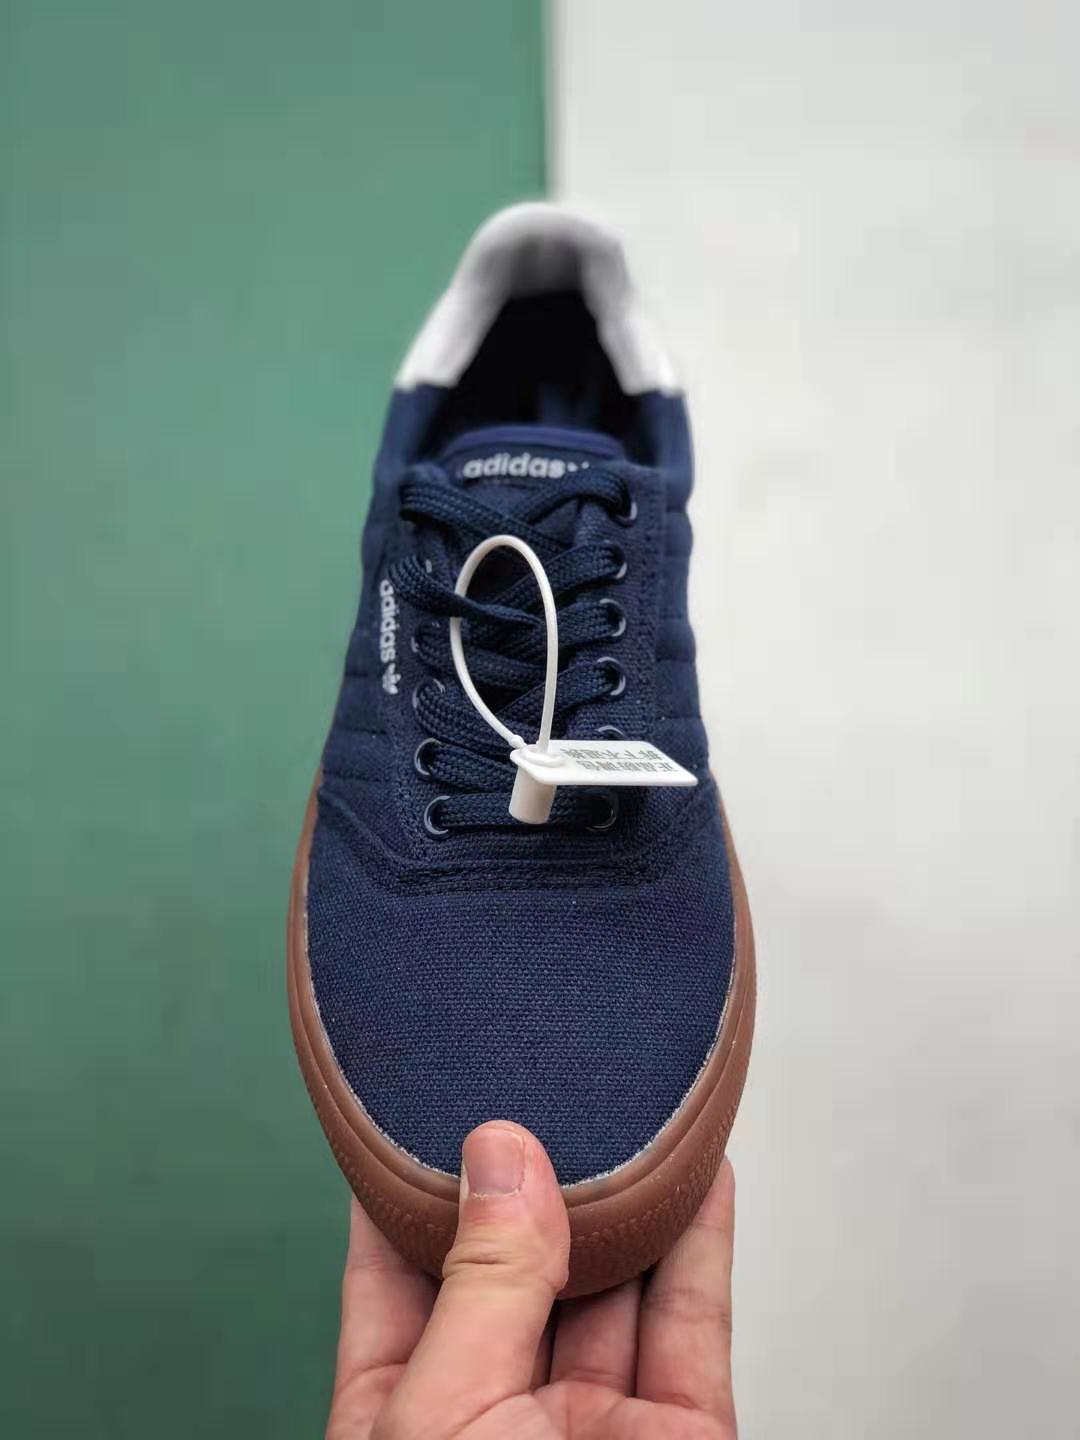 Adidas 3MC G54654 | Stylish Skate Shoes for Men | Free Shipping